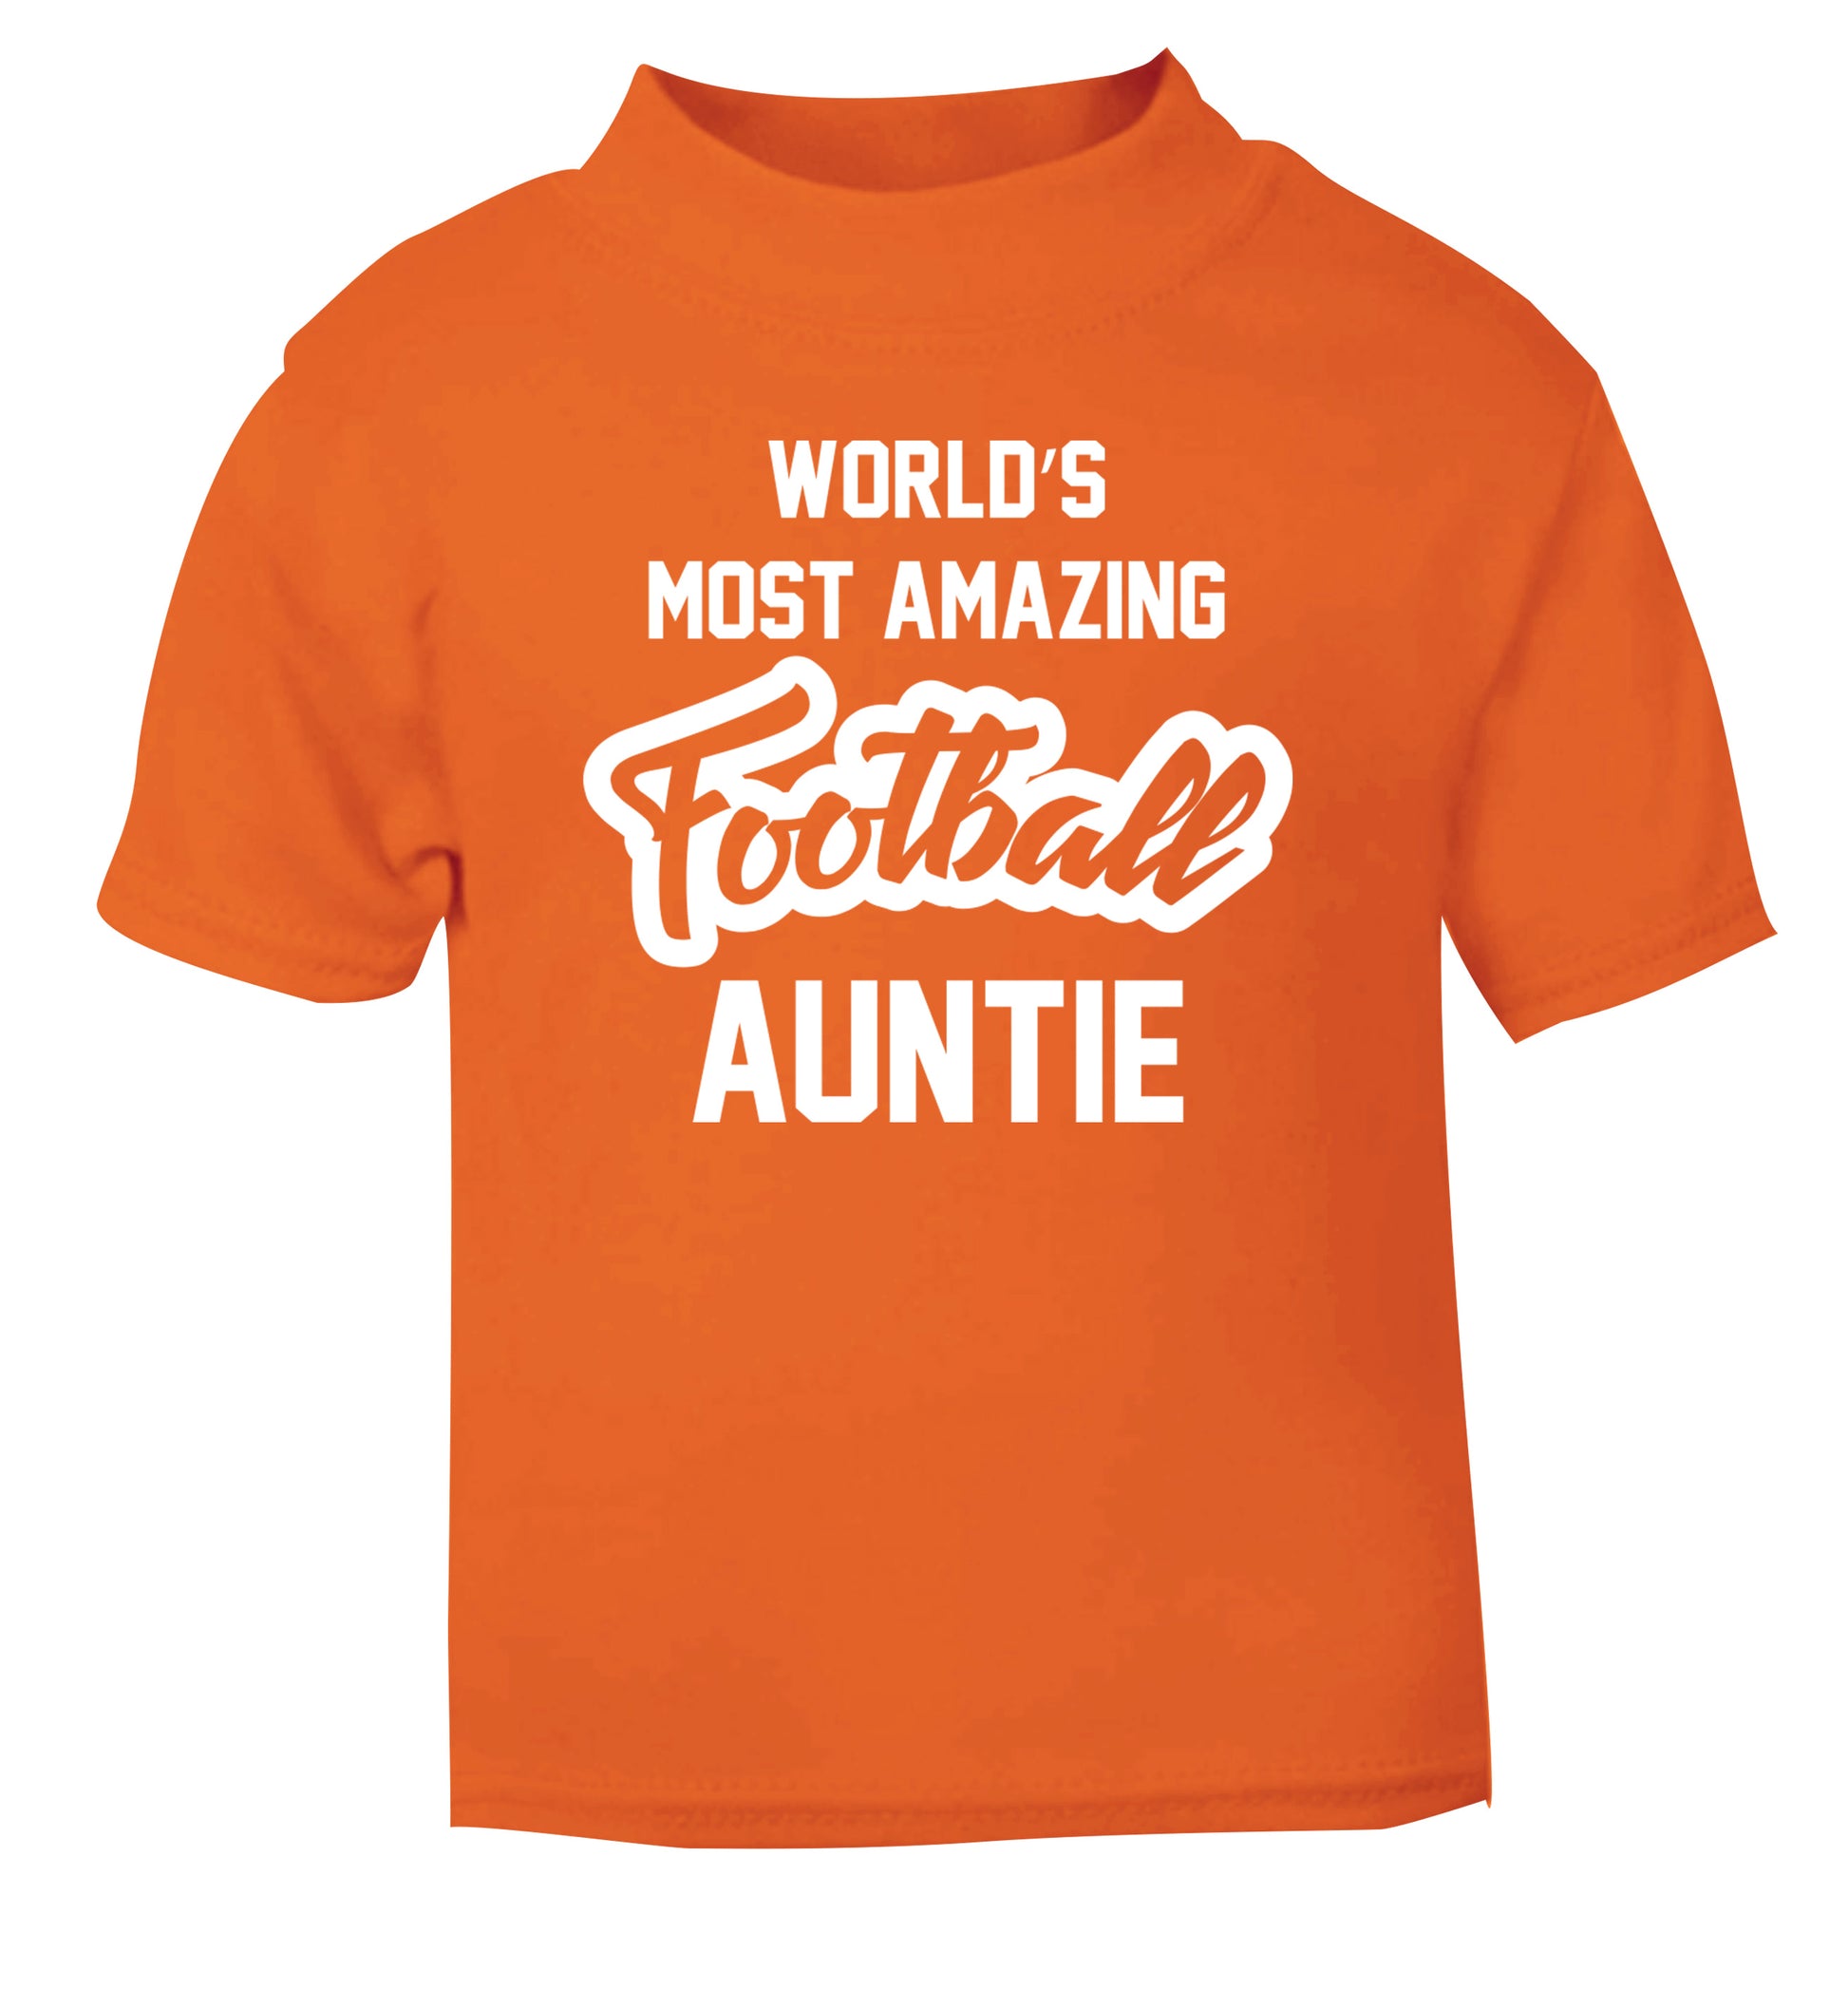 Worlds most amazing football auntie orange Baby Toddler Tshirt 2 Years